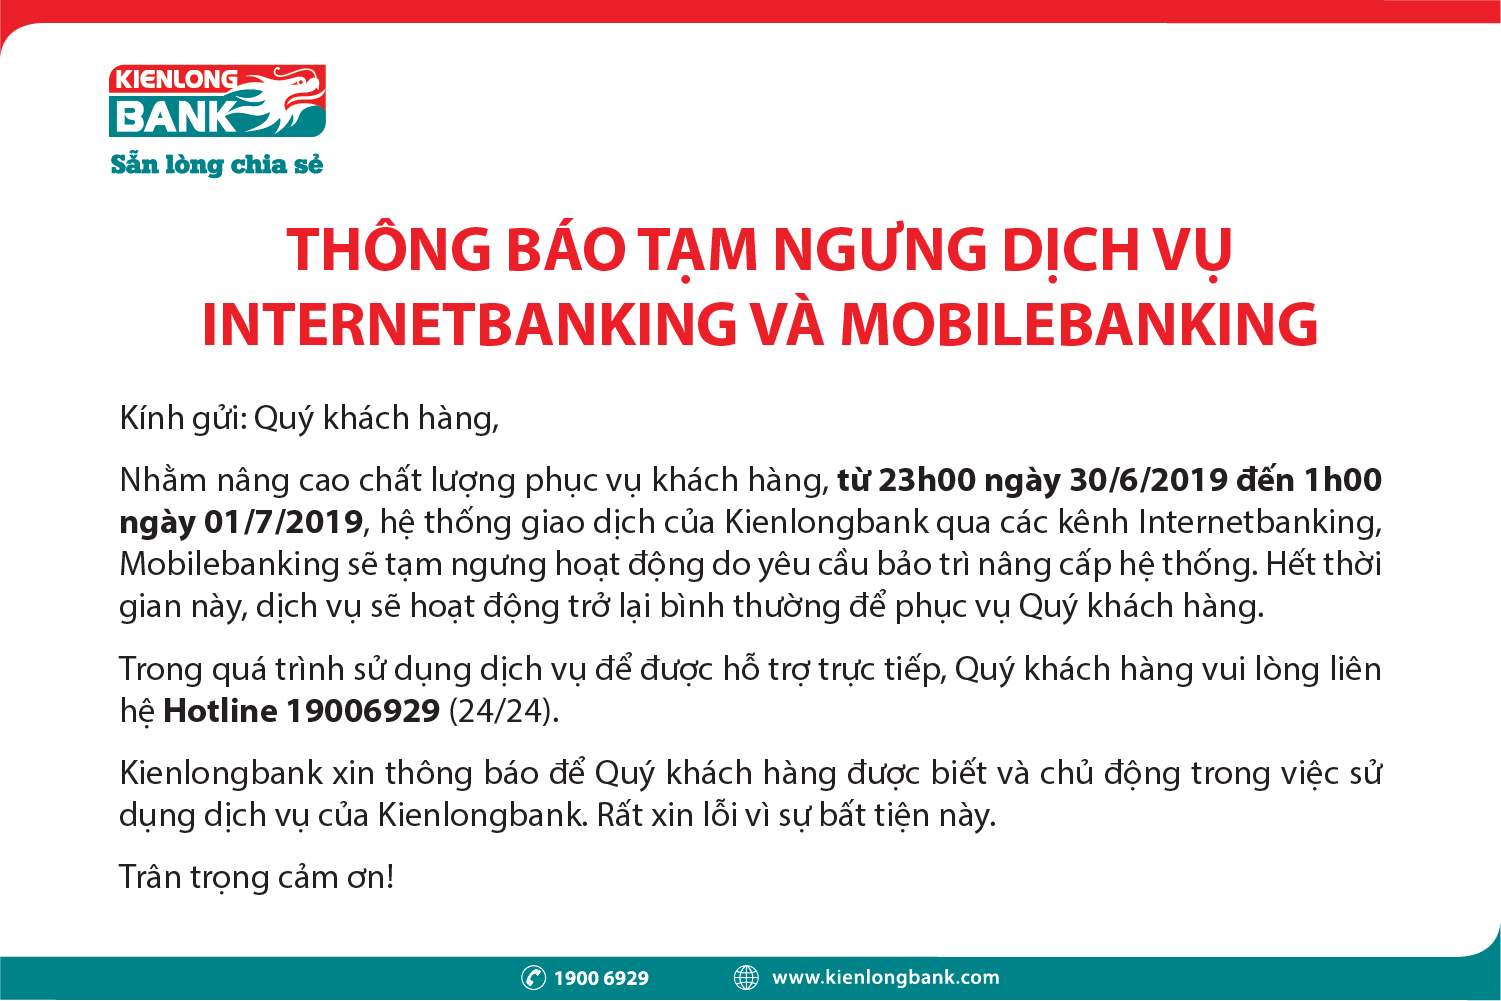 Kienlongbank-thong-bao-tam-ngung-dv-ebank-mbank